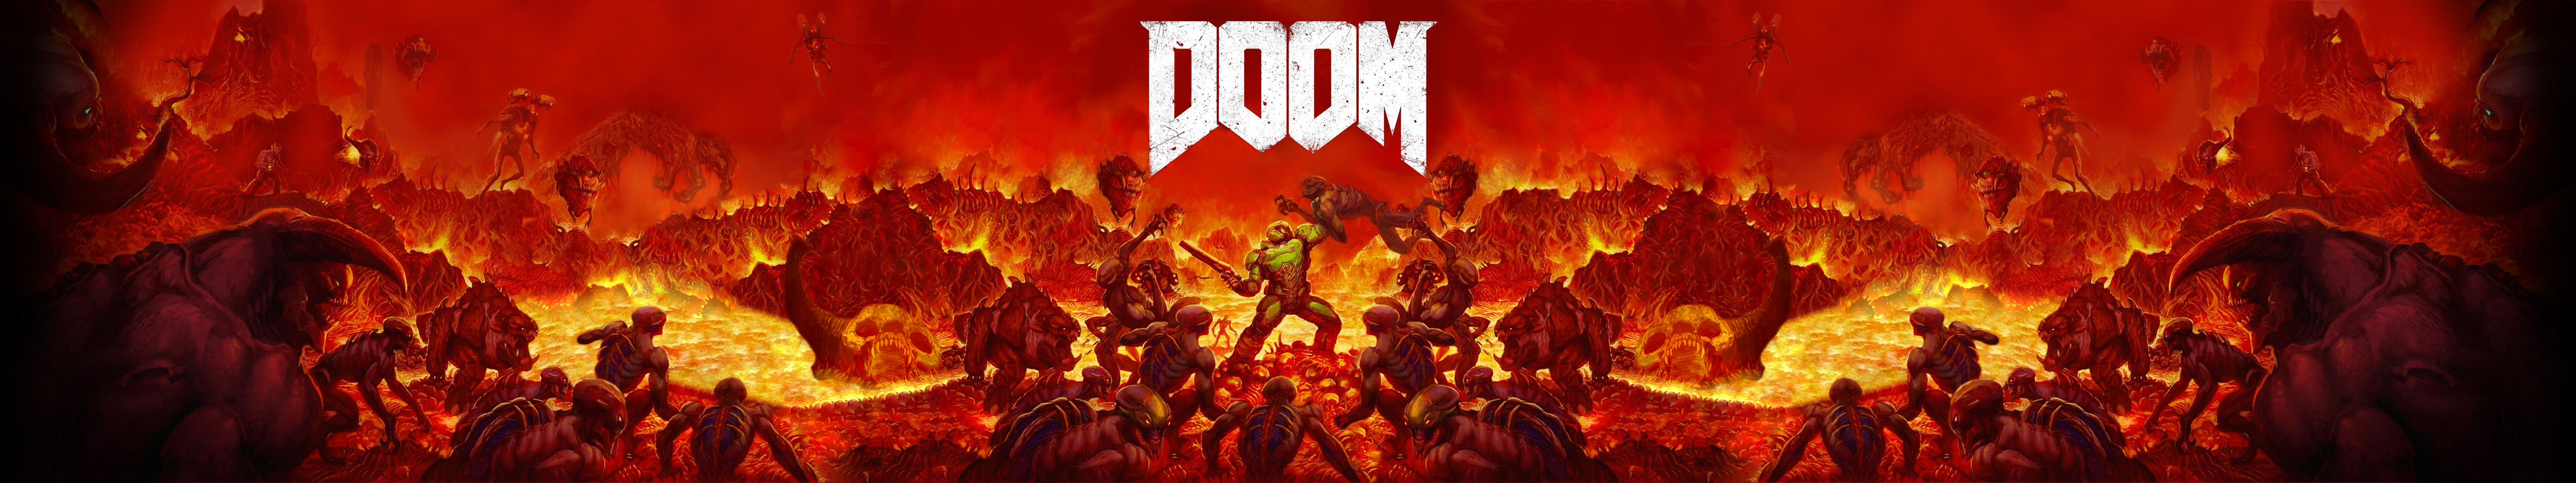 Doom Wallpaper 5760x1080 Using original game artwork Doom